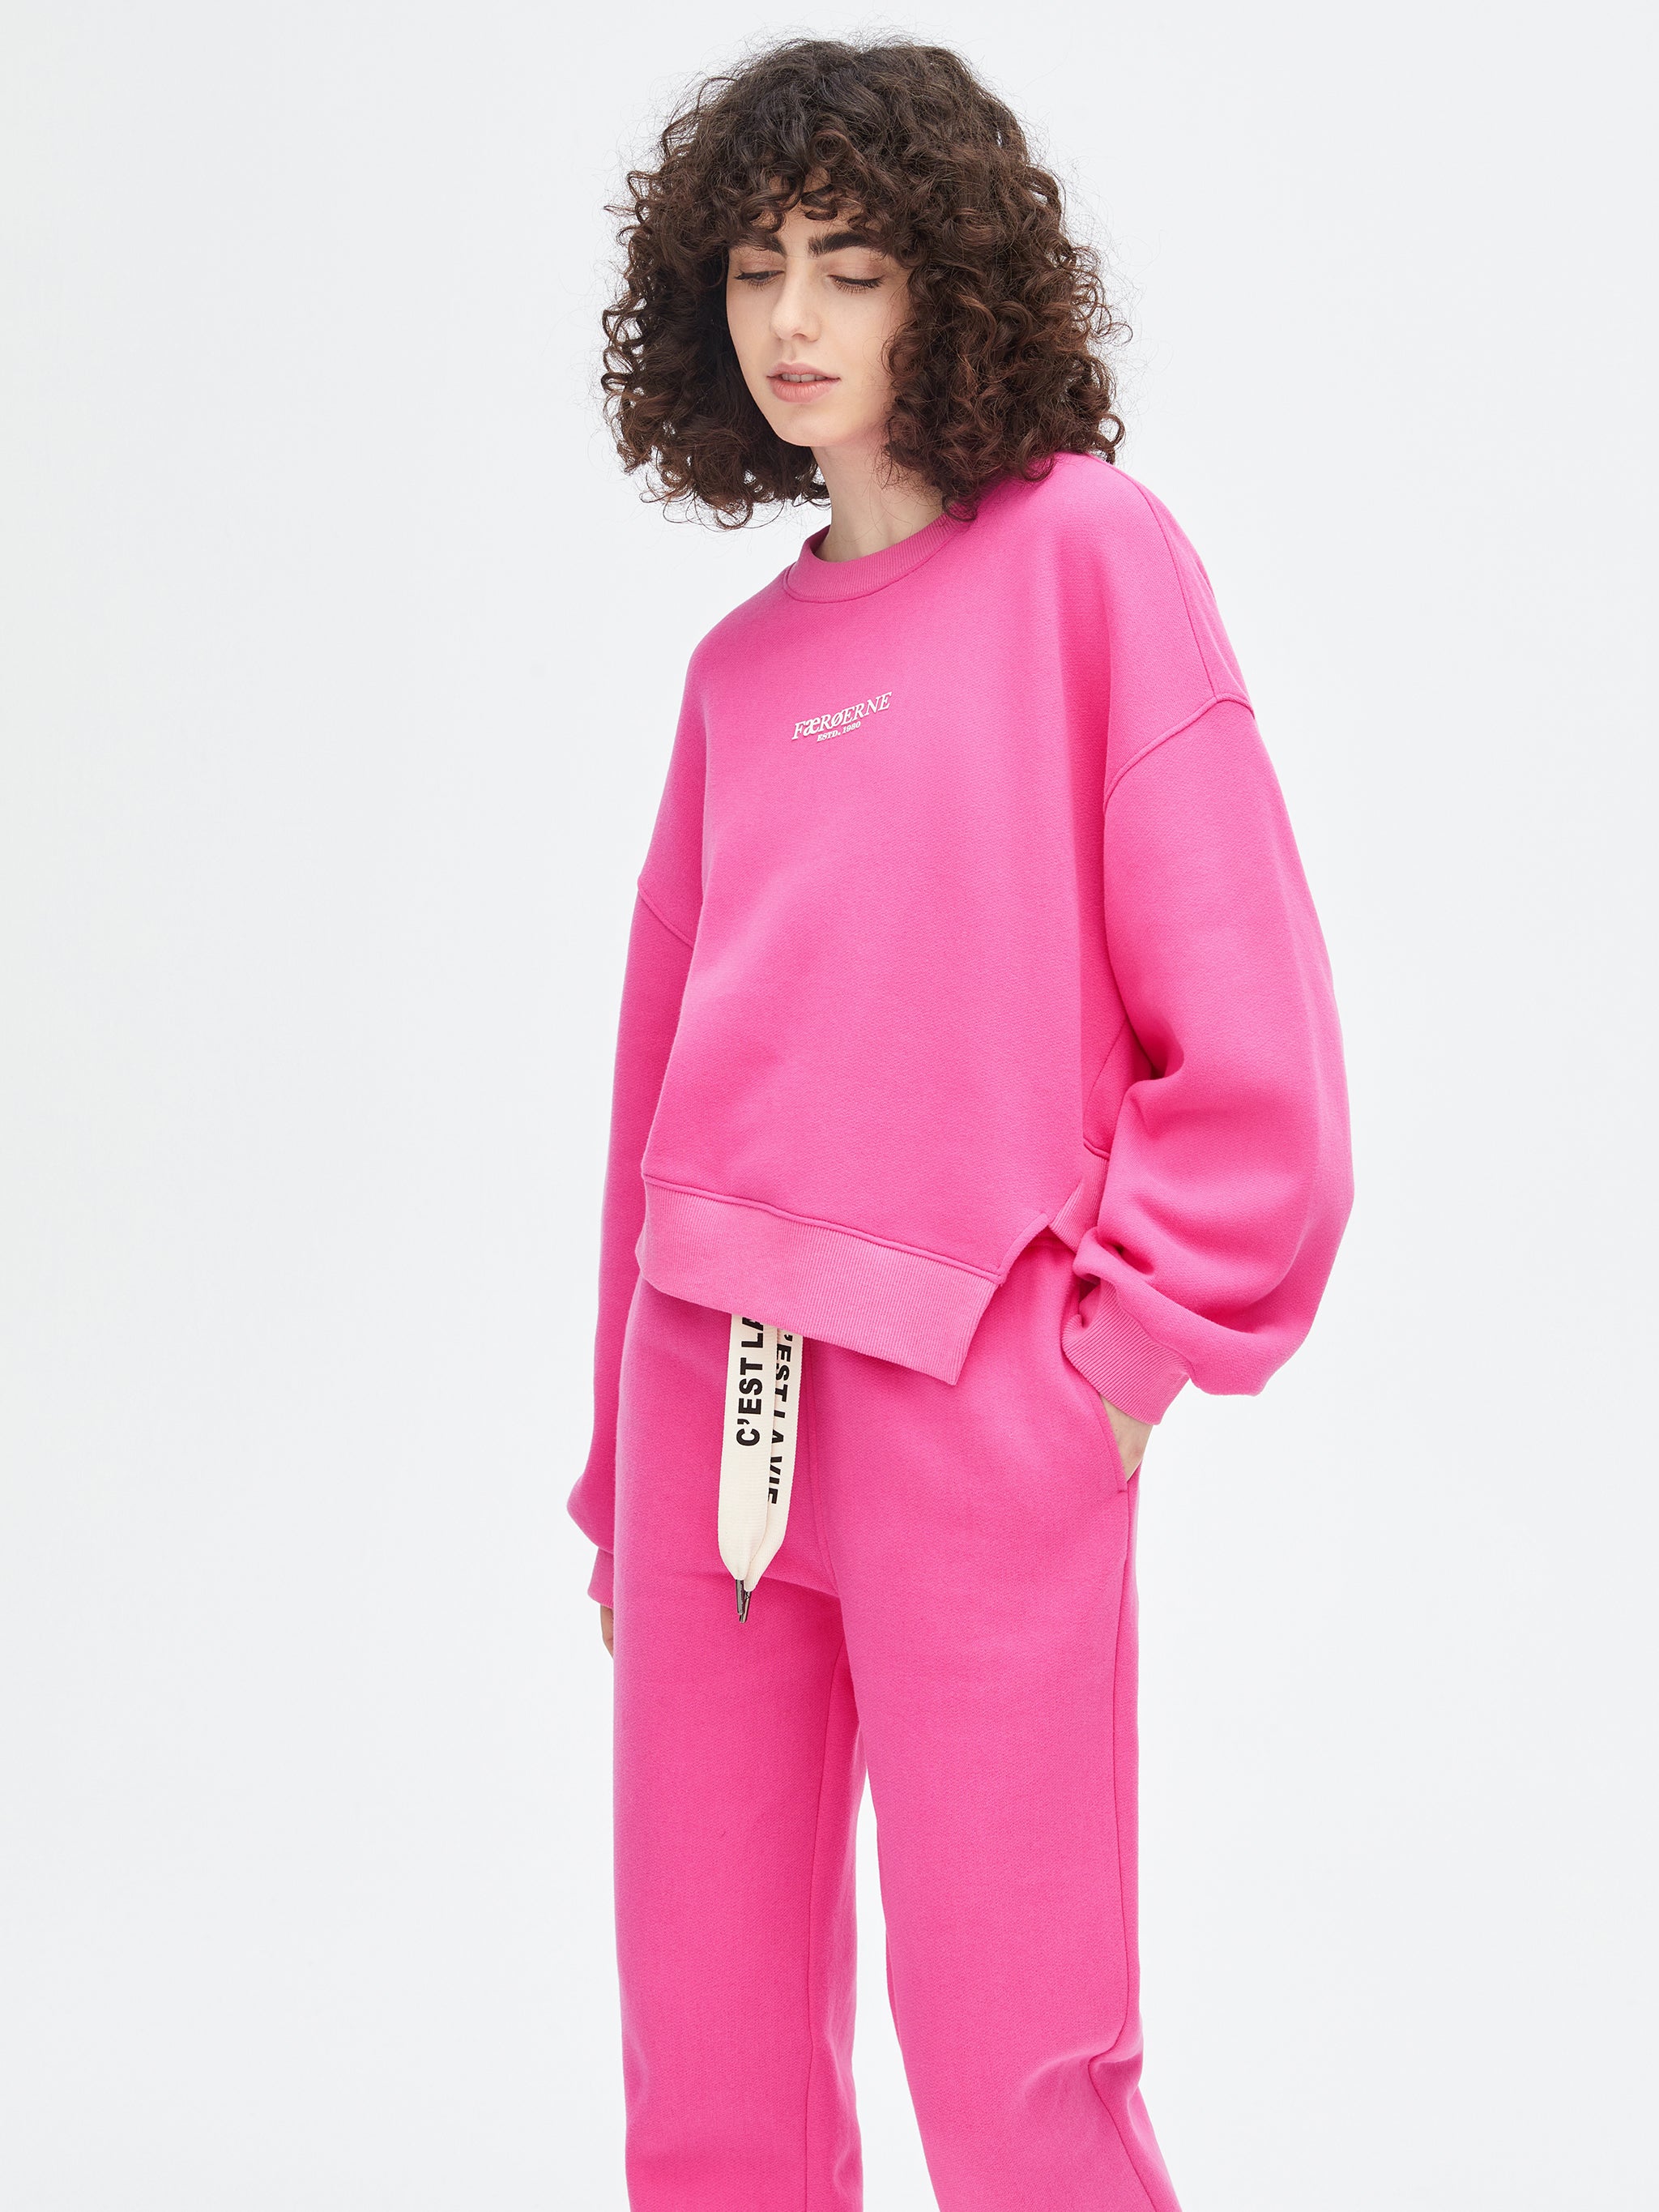 Urlazh – New Set-Sweatershirt York Rose Pink